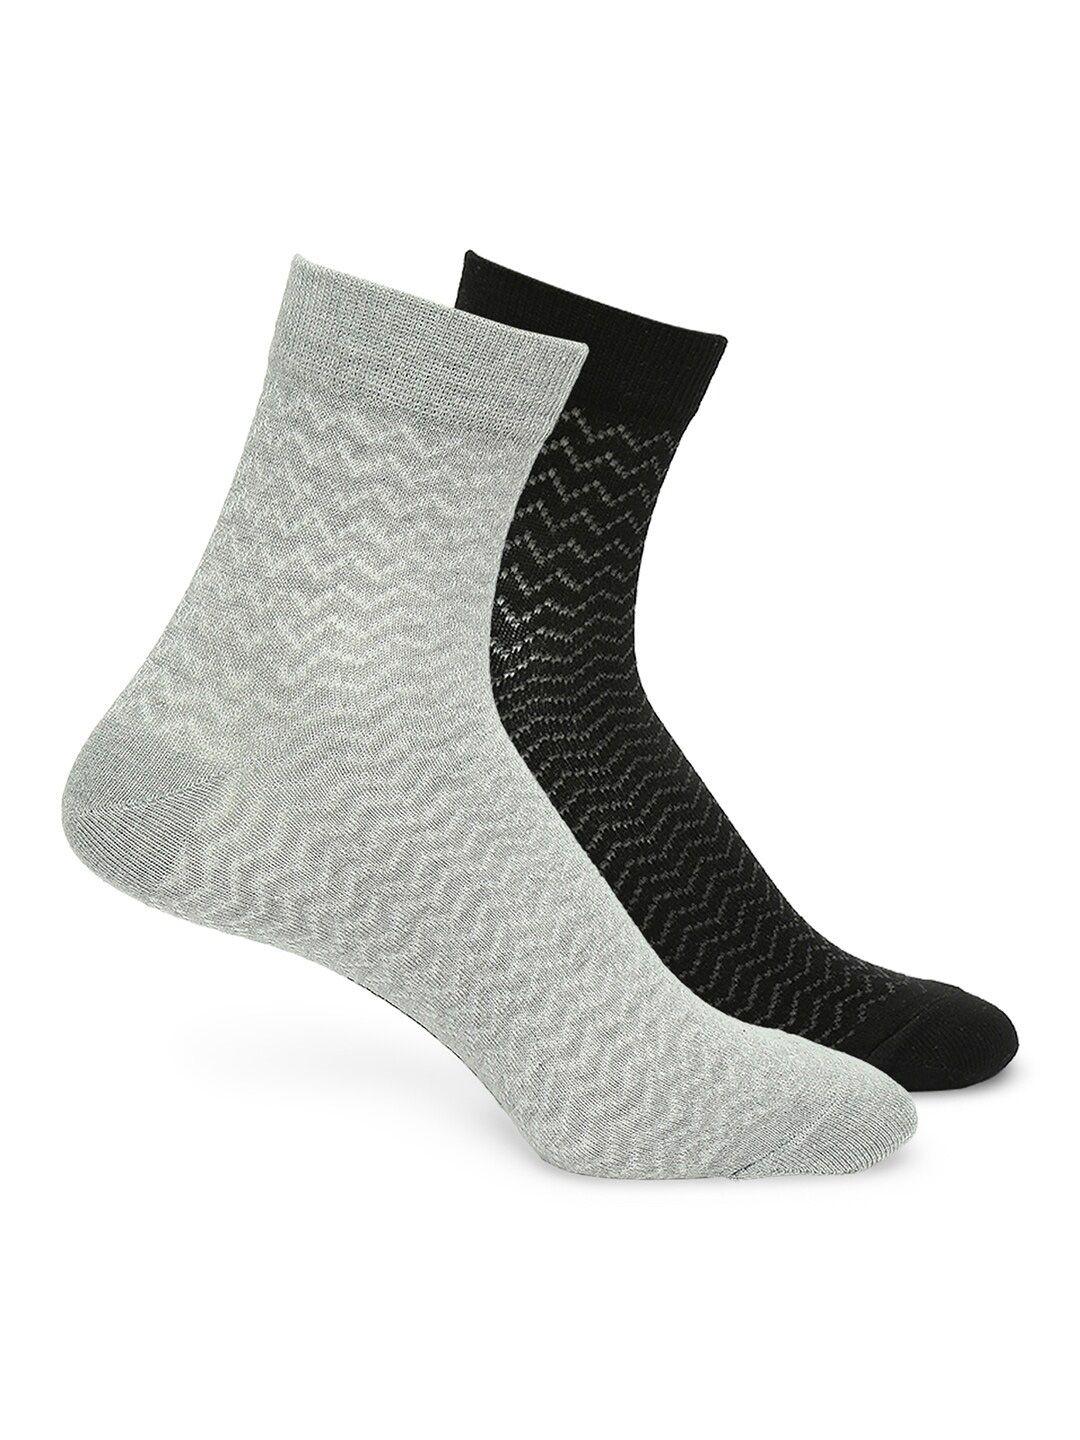 underjeans-by-spykar-men-pack-of-2-patterned-ankle-length-cotton-socks